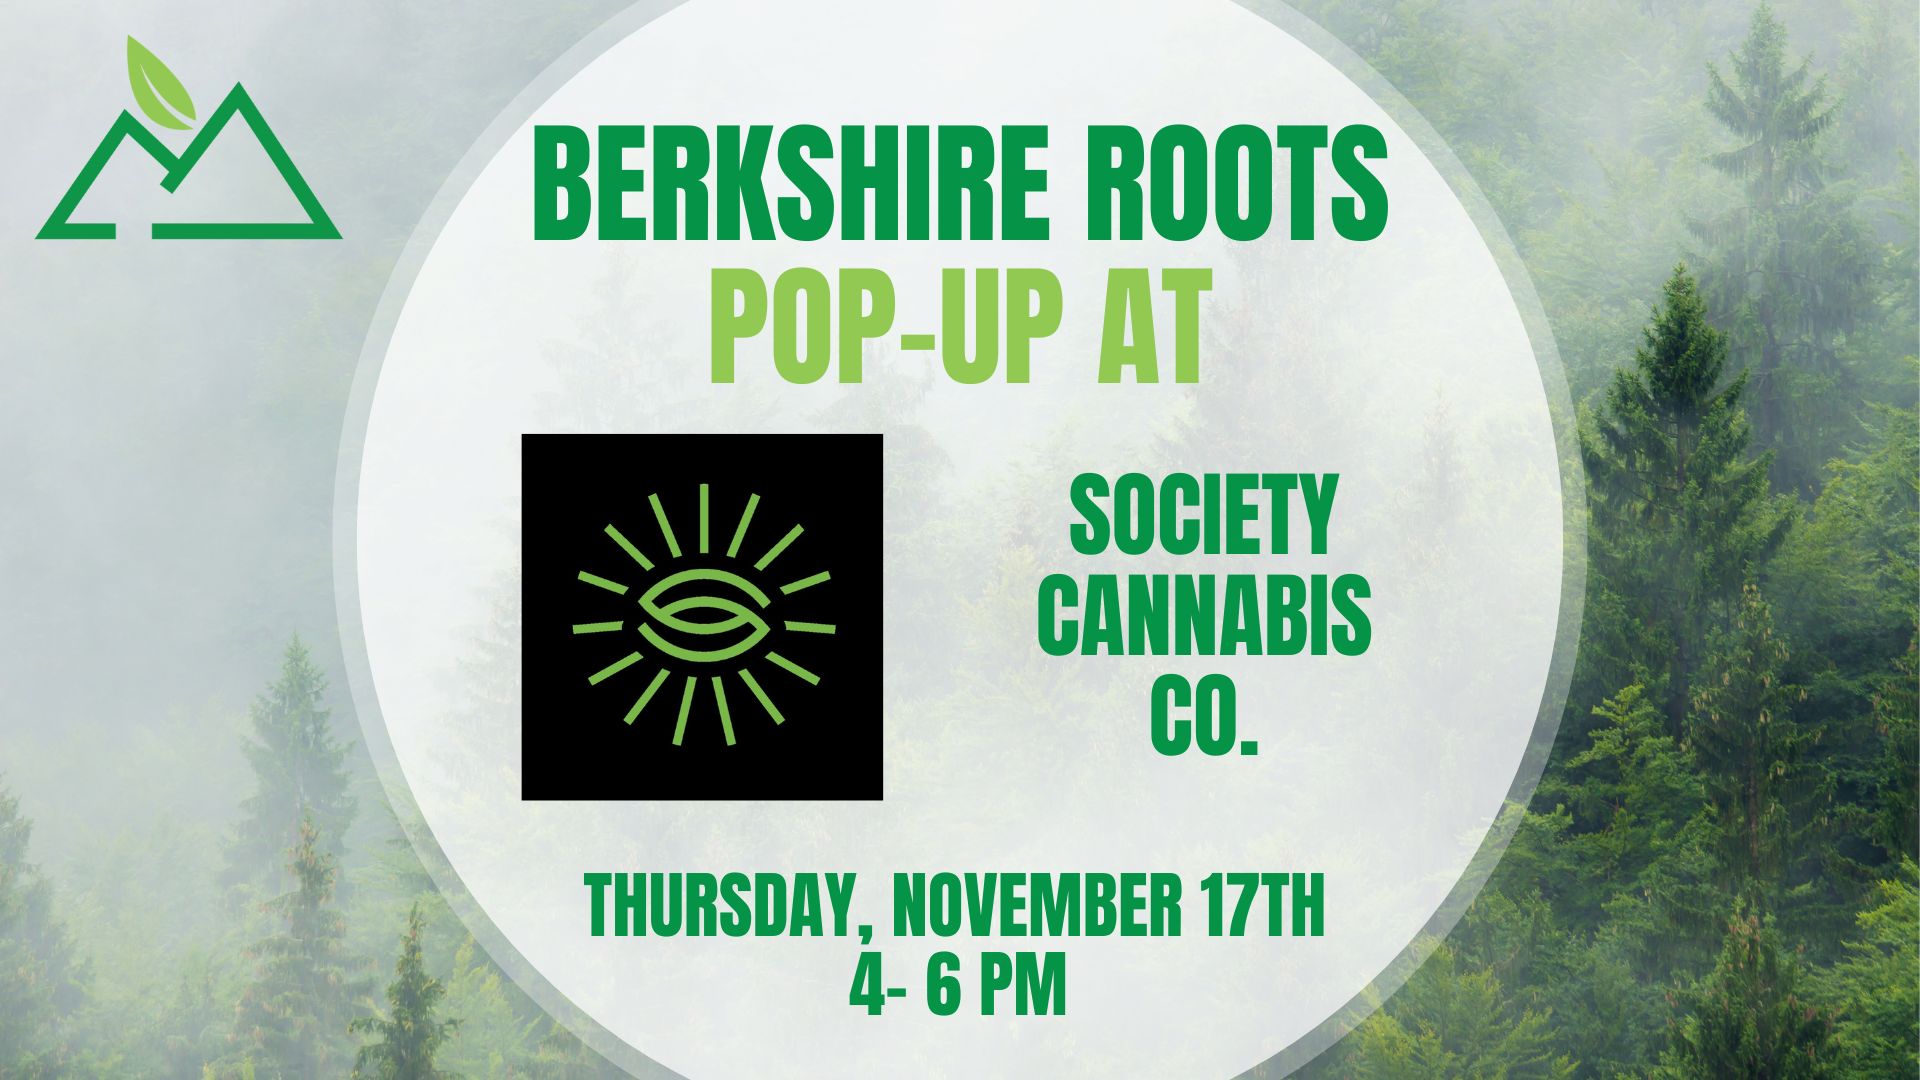 Berkshire Roots popup at Society Cannabis Co